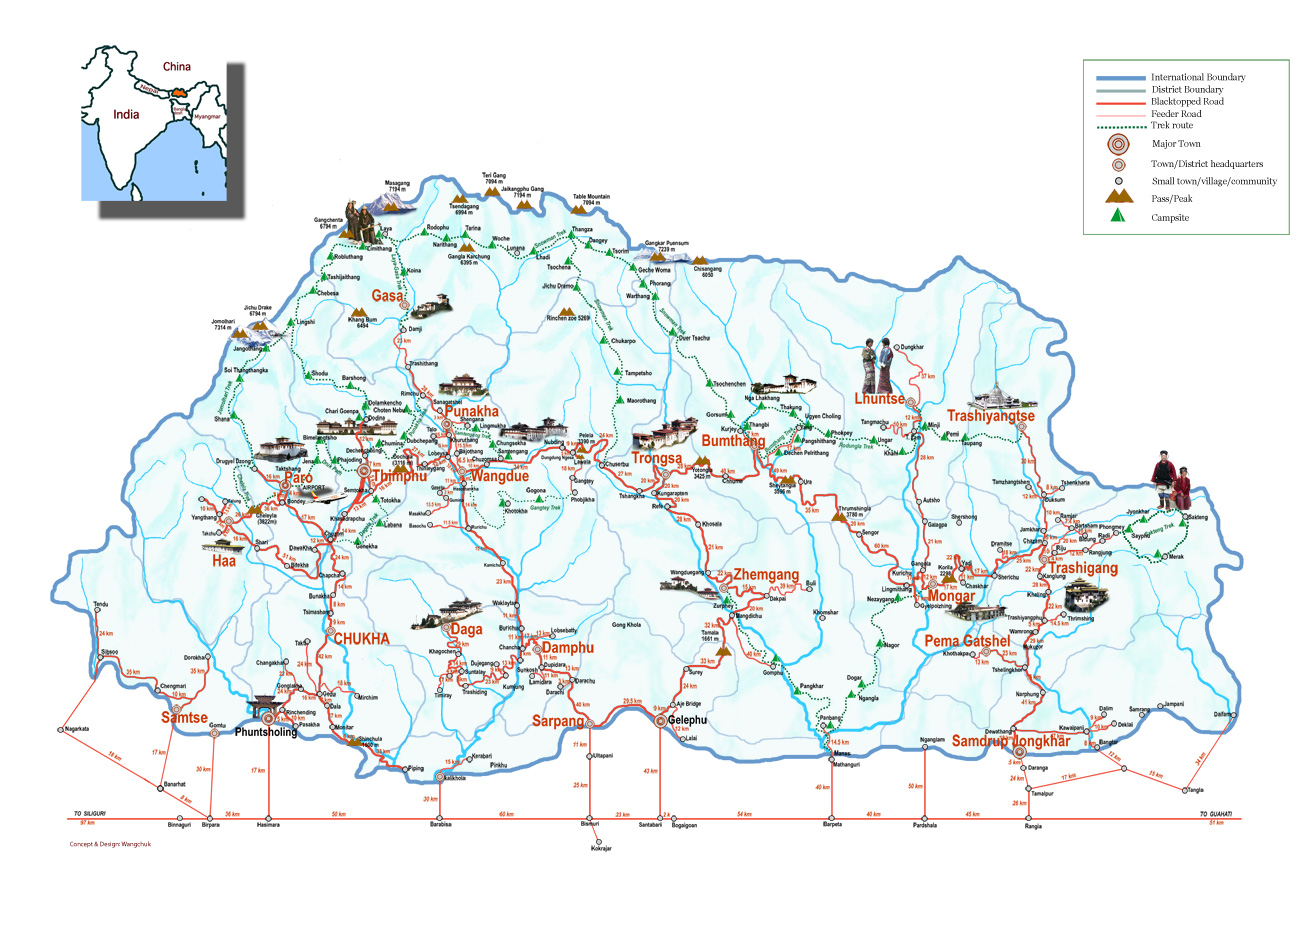 bhutan-map